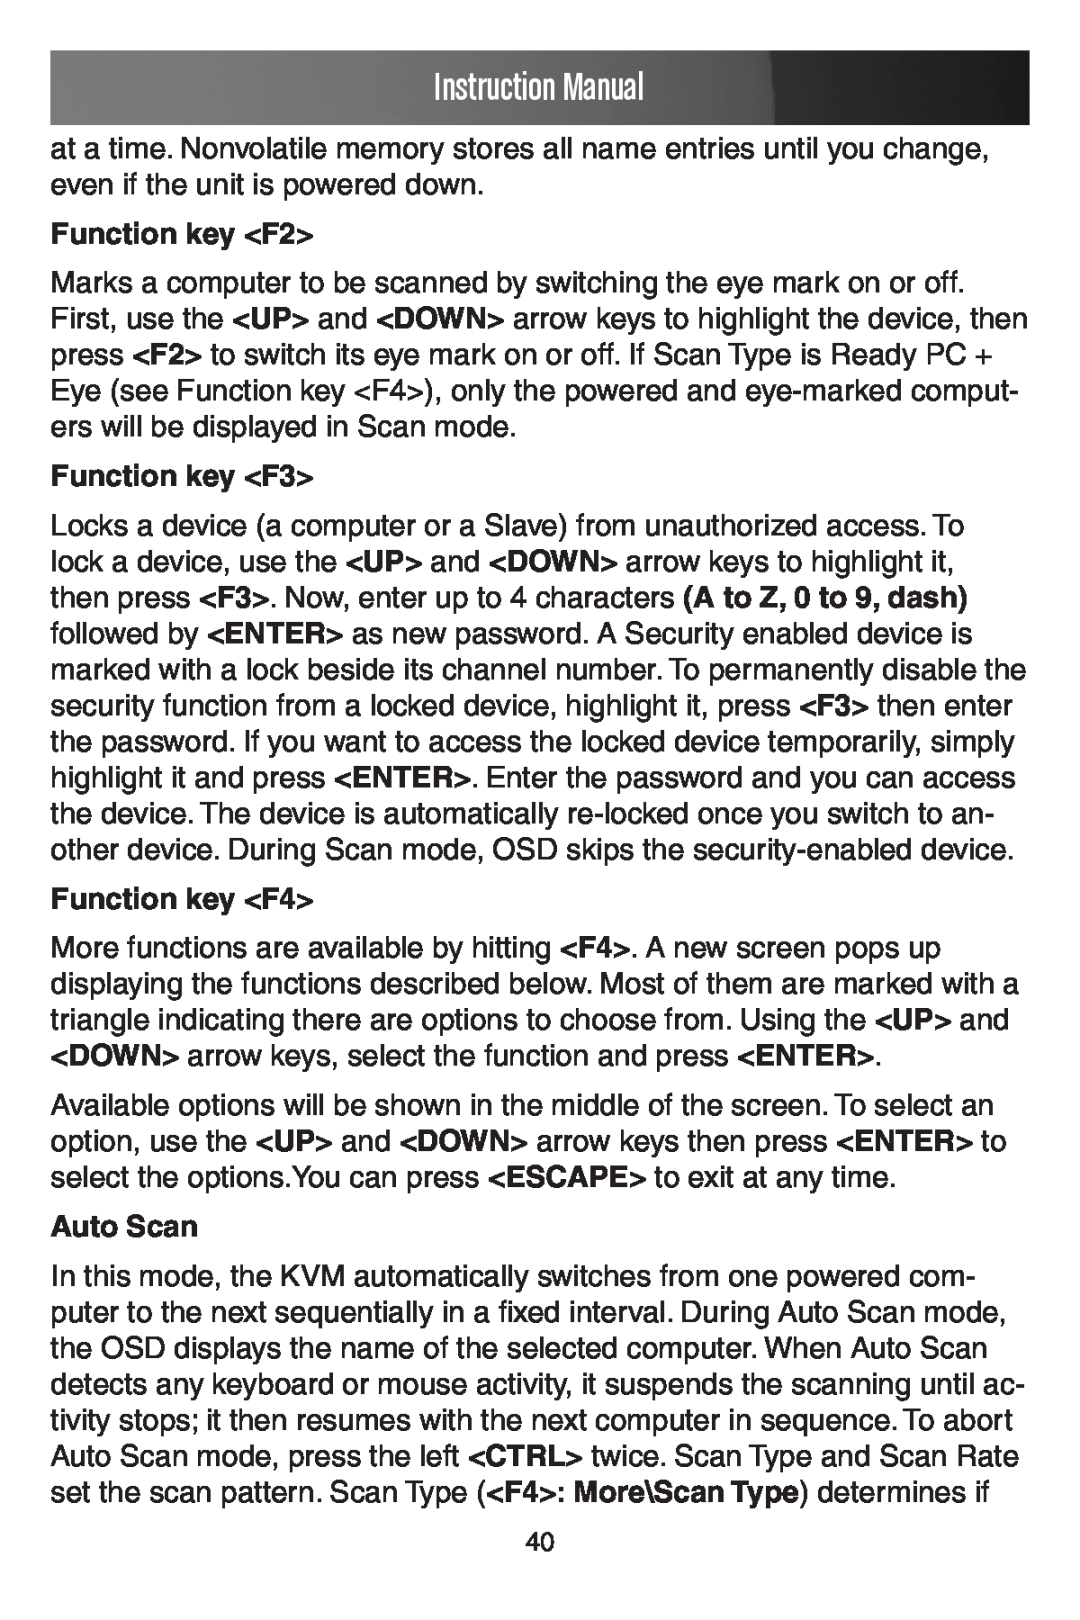 StarTech.com SV441DUSBI instruction manual Function key F2, Function key F3, Function key F4, Auto Scan, Instruction Manual 